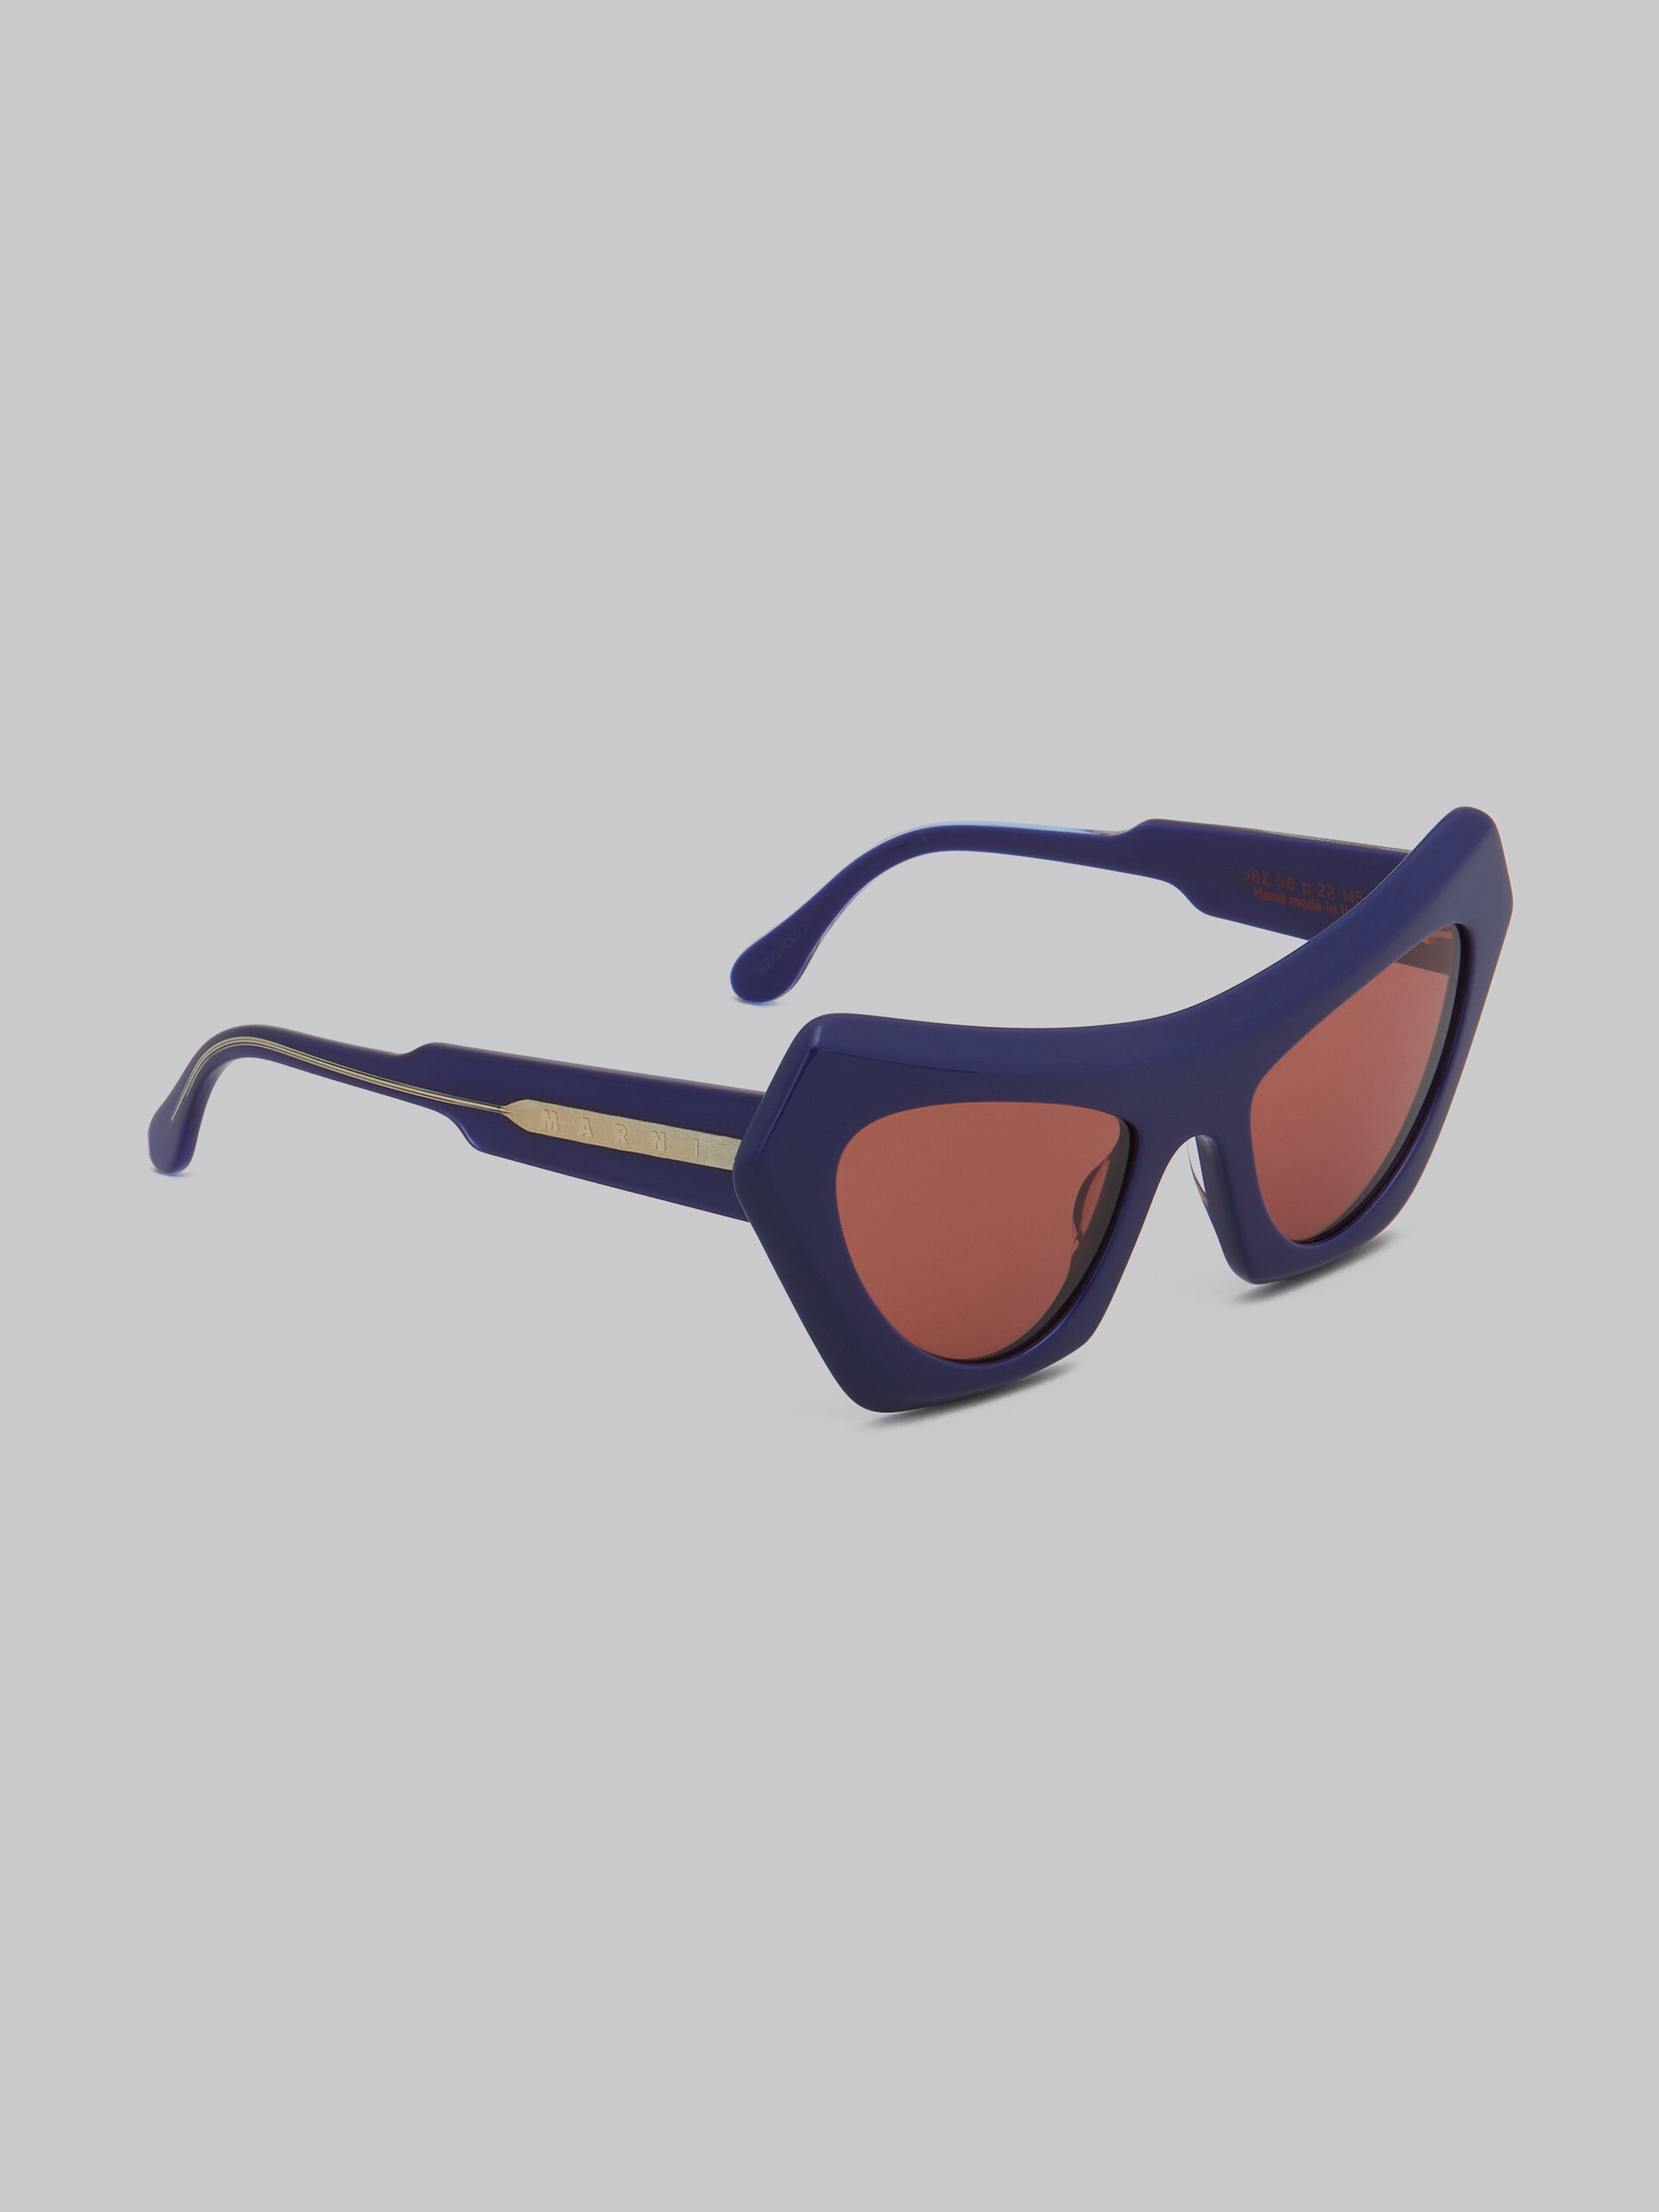 Devil's Pool blue sunglasses - Optical - Image 3